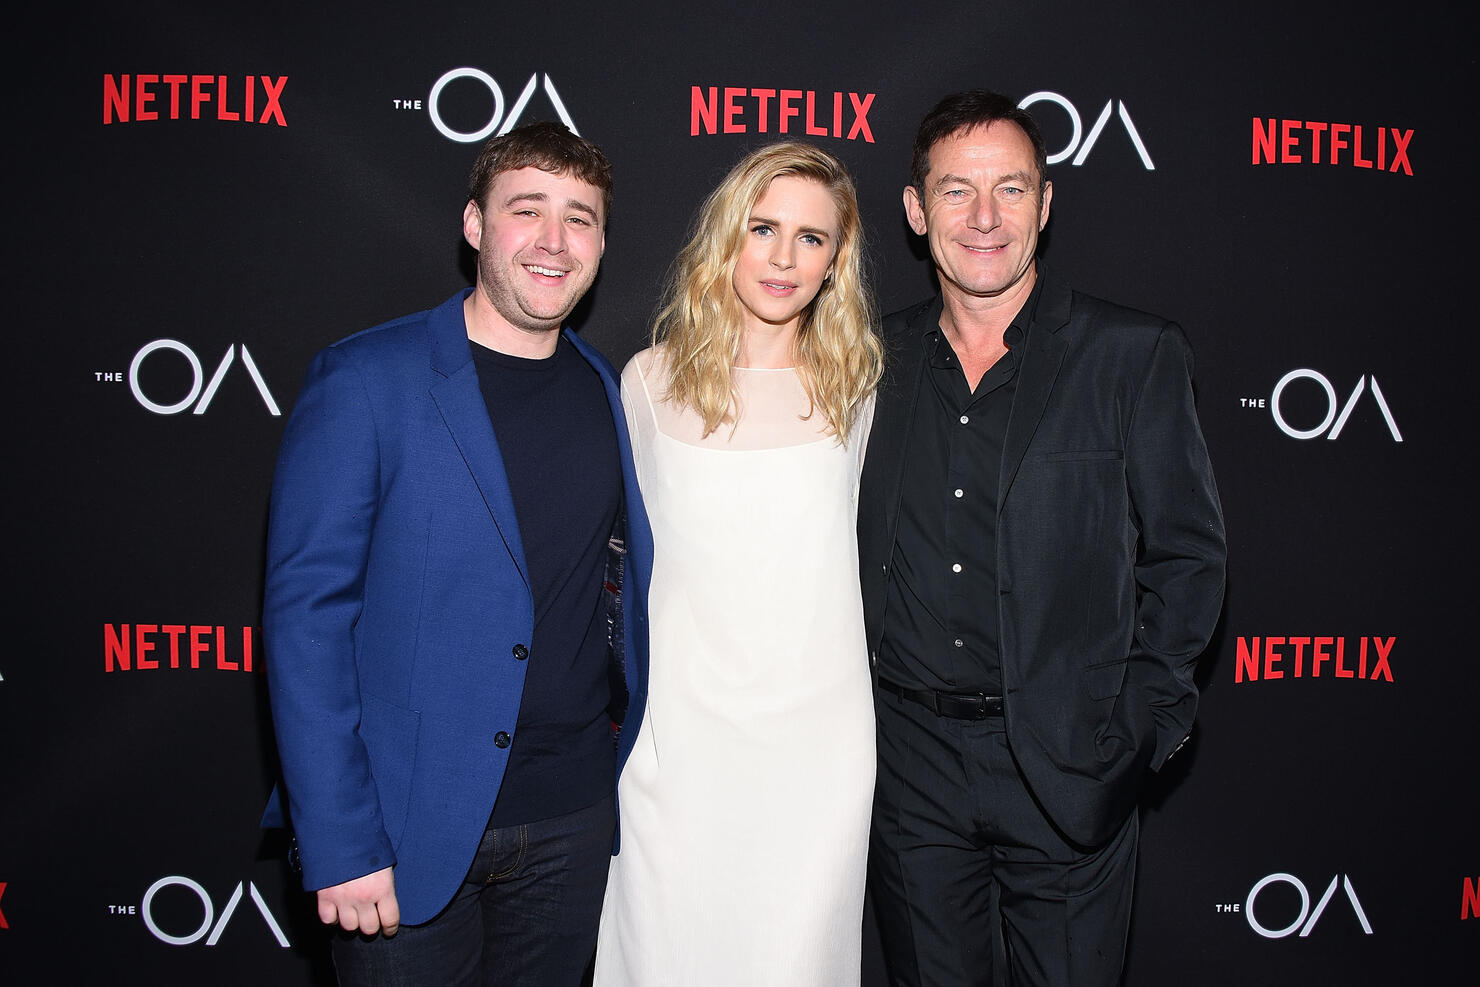 Premiere Of Netflix's "The OA" - Arrivals